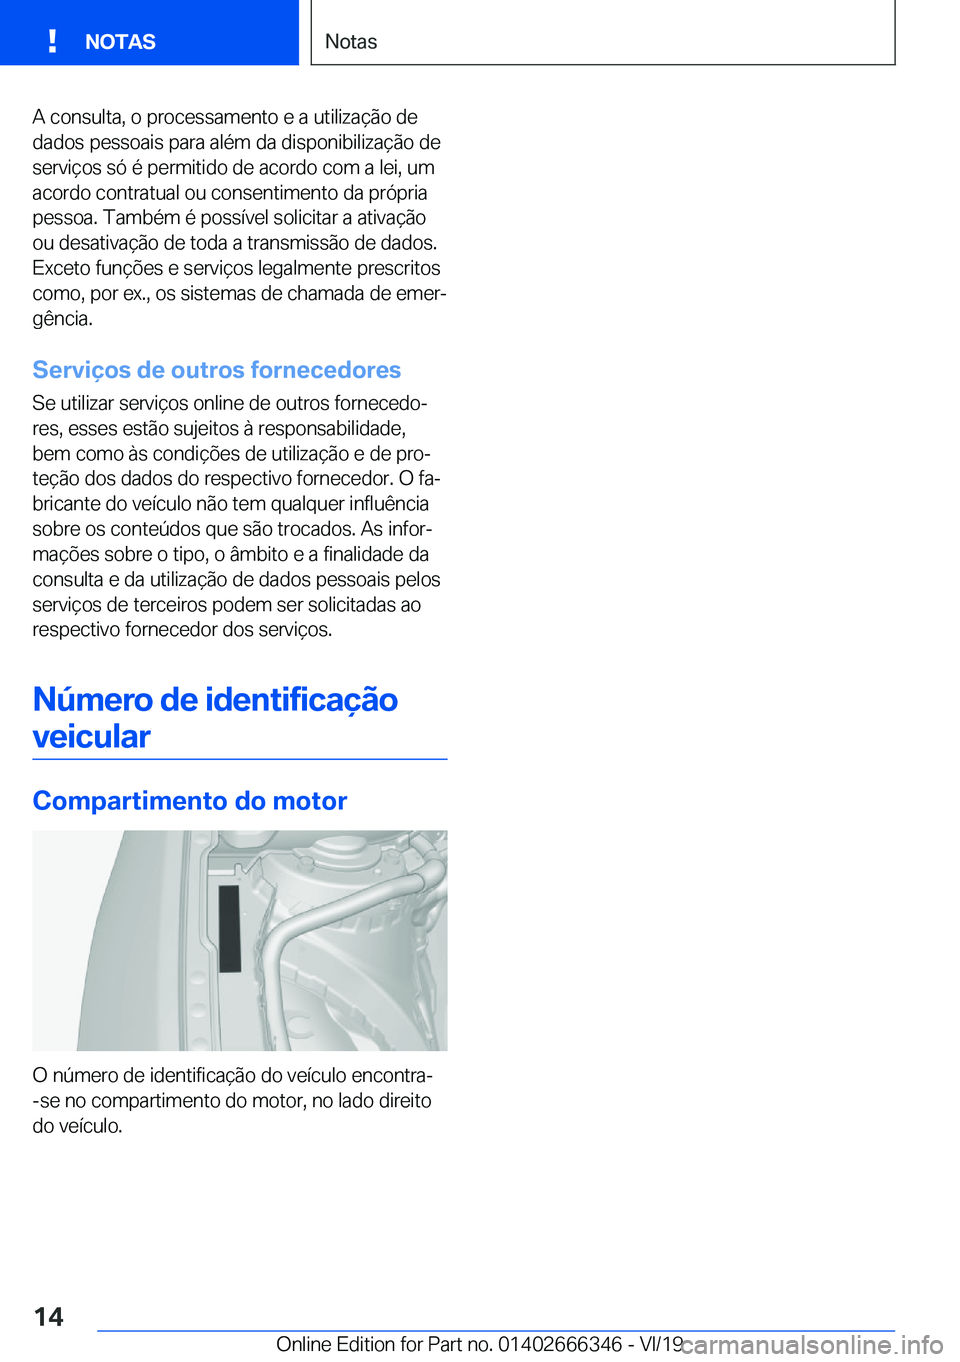 BMW 4 SERIES COUPE 2020  Manual do condutor (in Portuguese) �A��c�o�n�s�u�l�t�a�,��o��p�r�o�c�e�s�s�a�m�e�n�t�o��e��a��u�t�i�l�i�z�a�